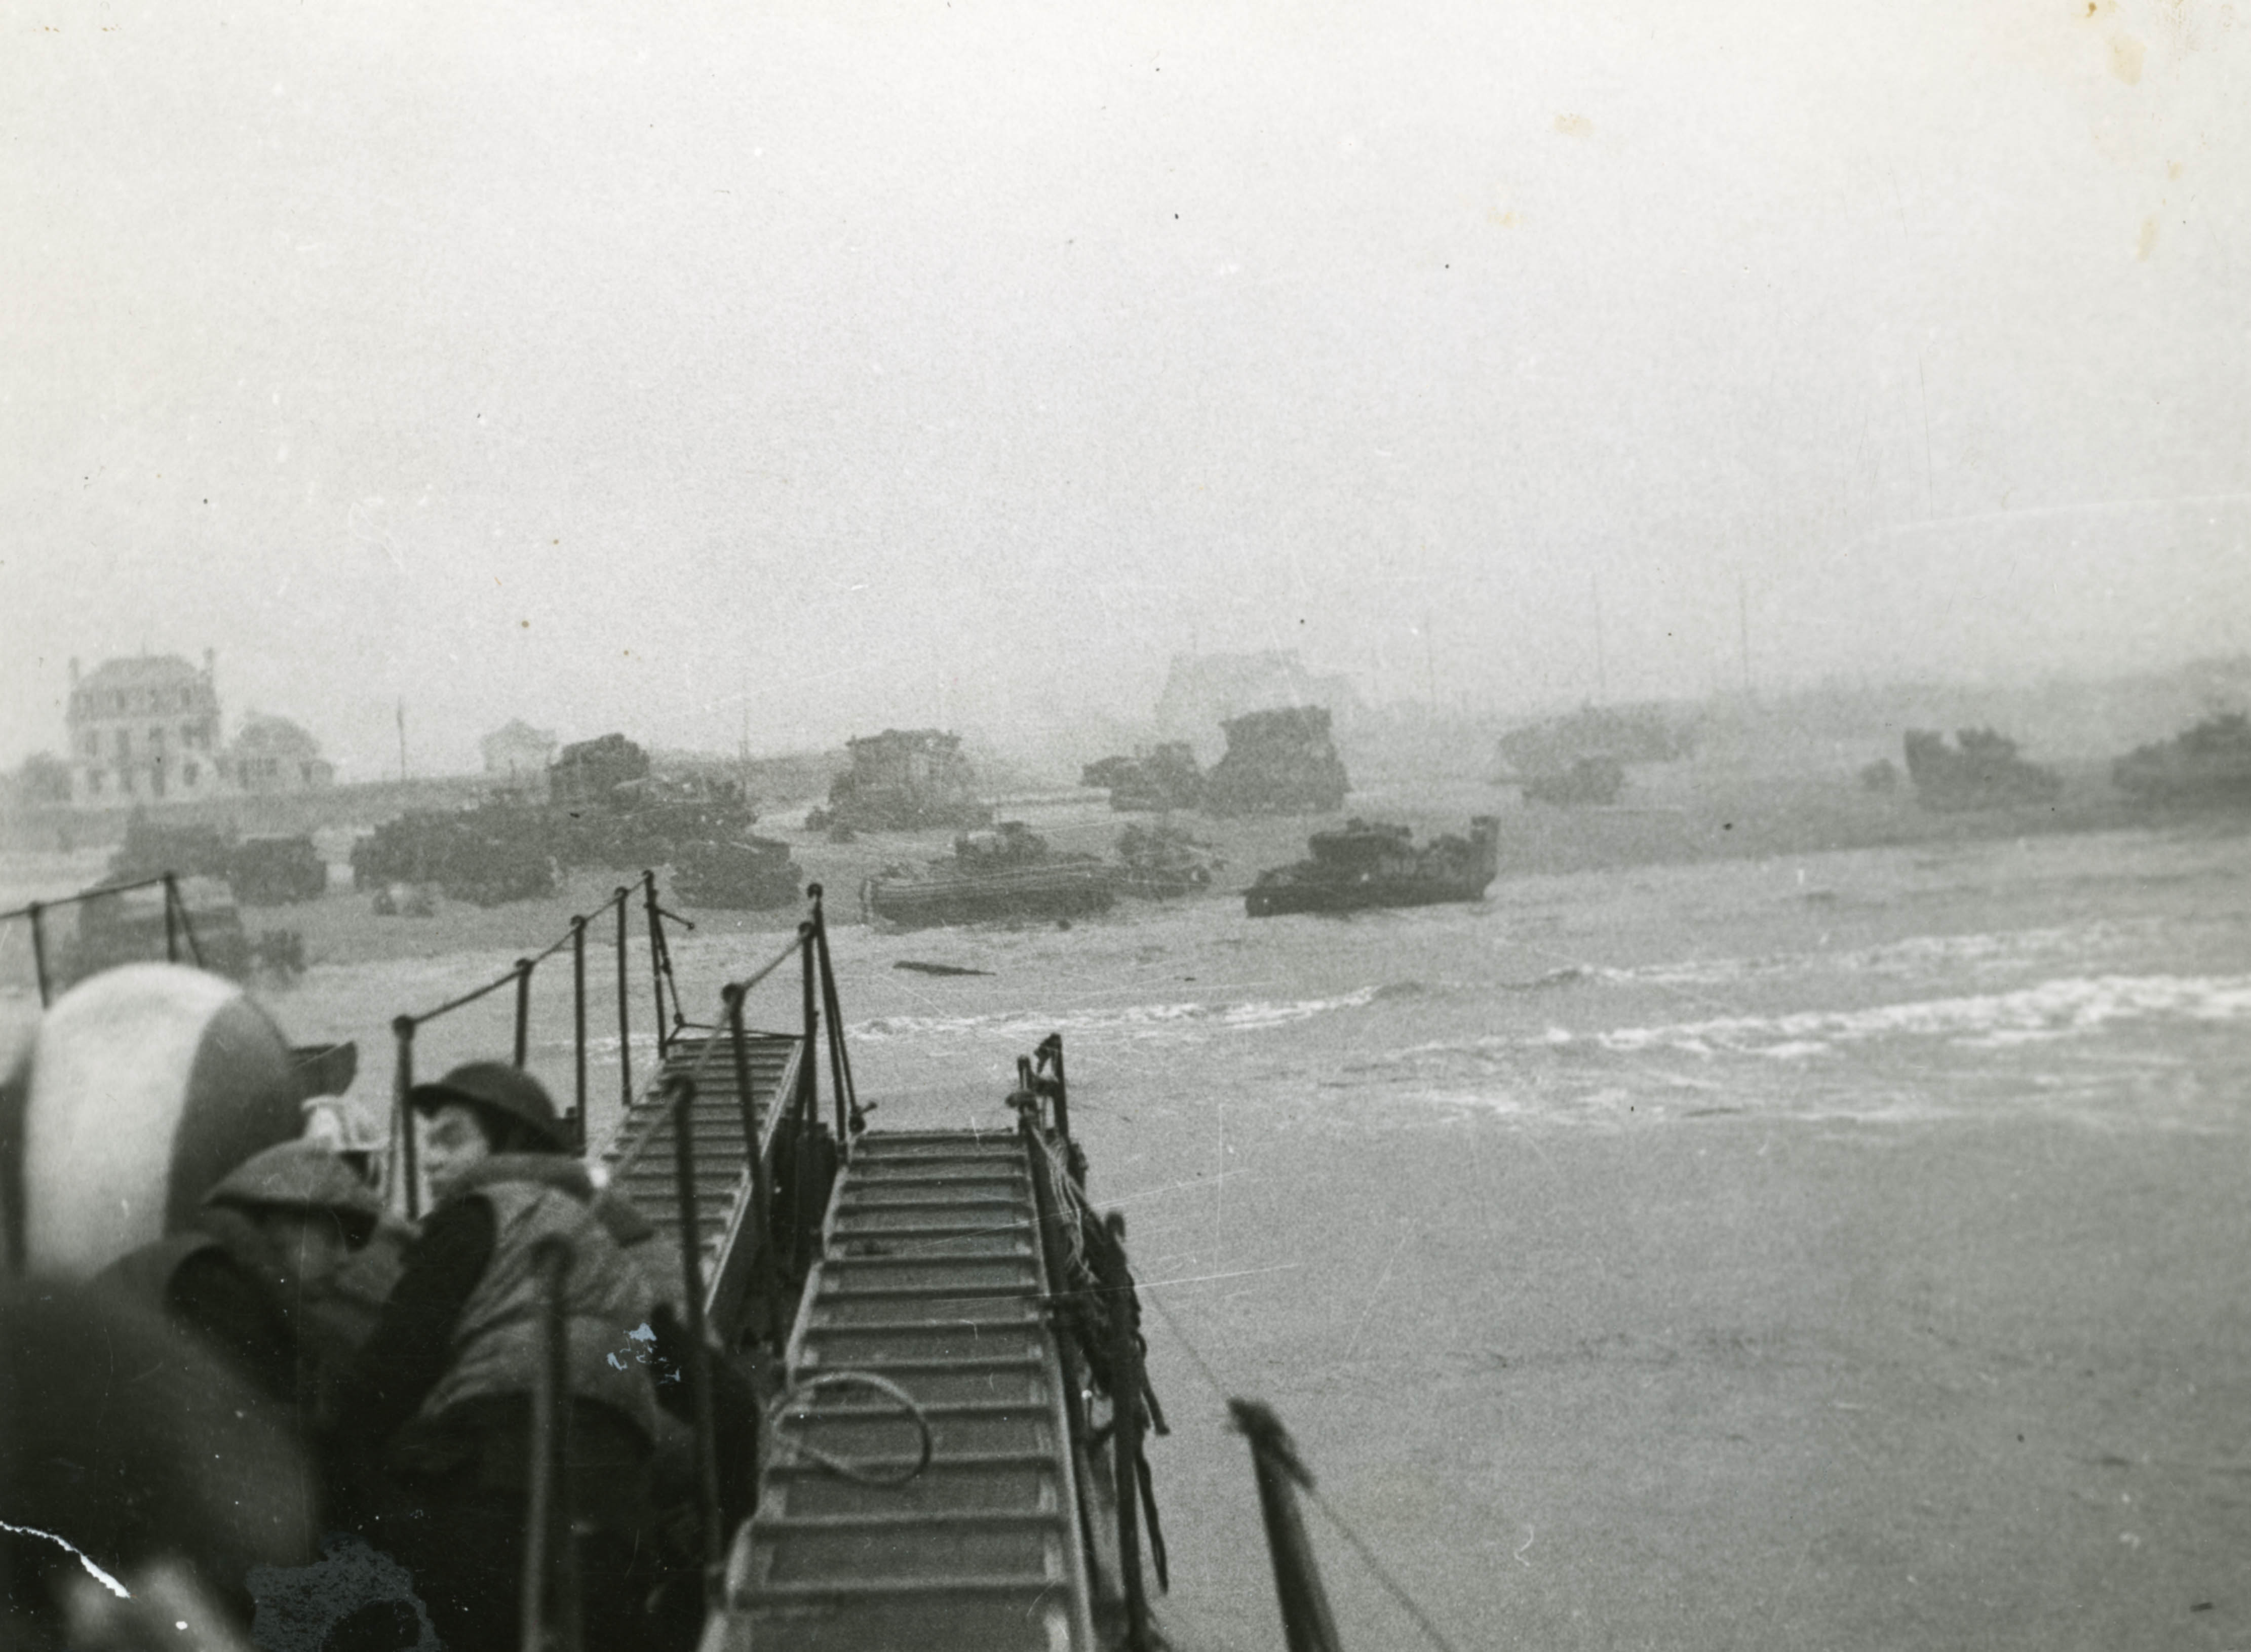 Royal Marine Commandos landing at Sword Beach during D-Day